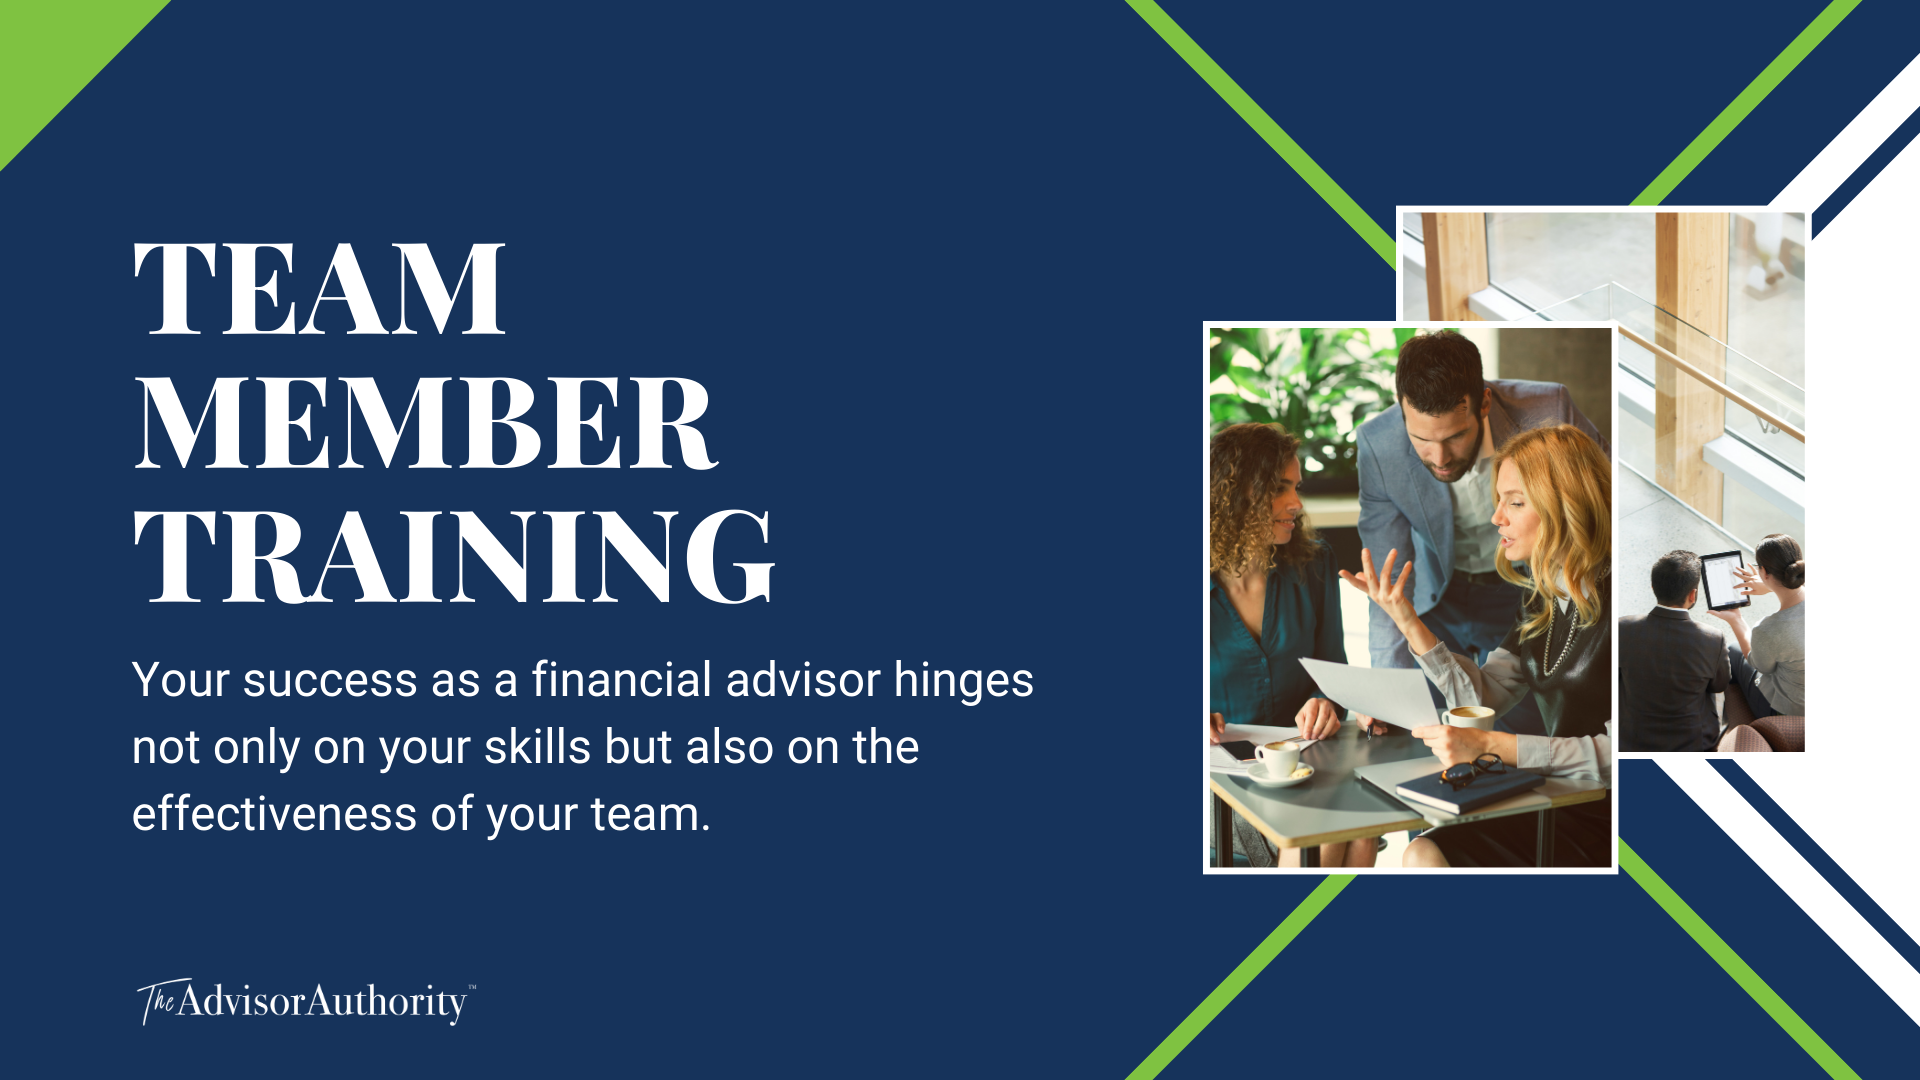 Team Member Training | Financial Advisor Training | The Advisor Authority